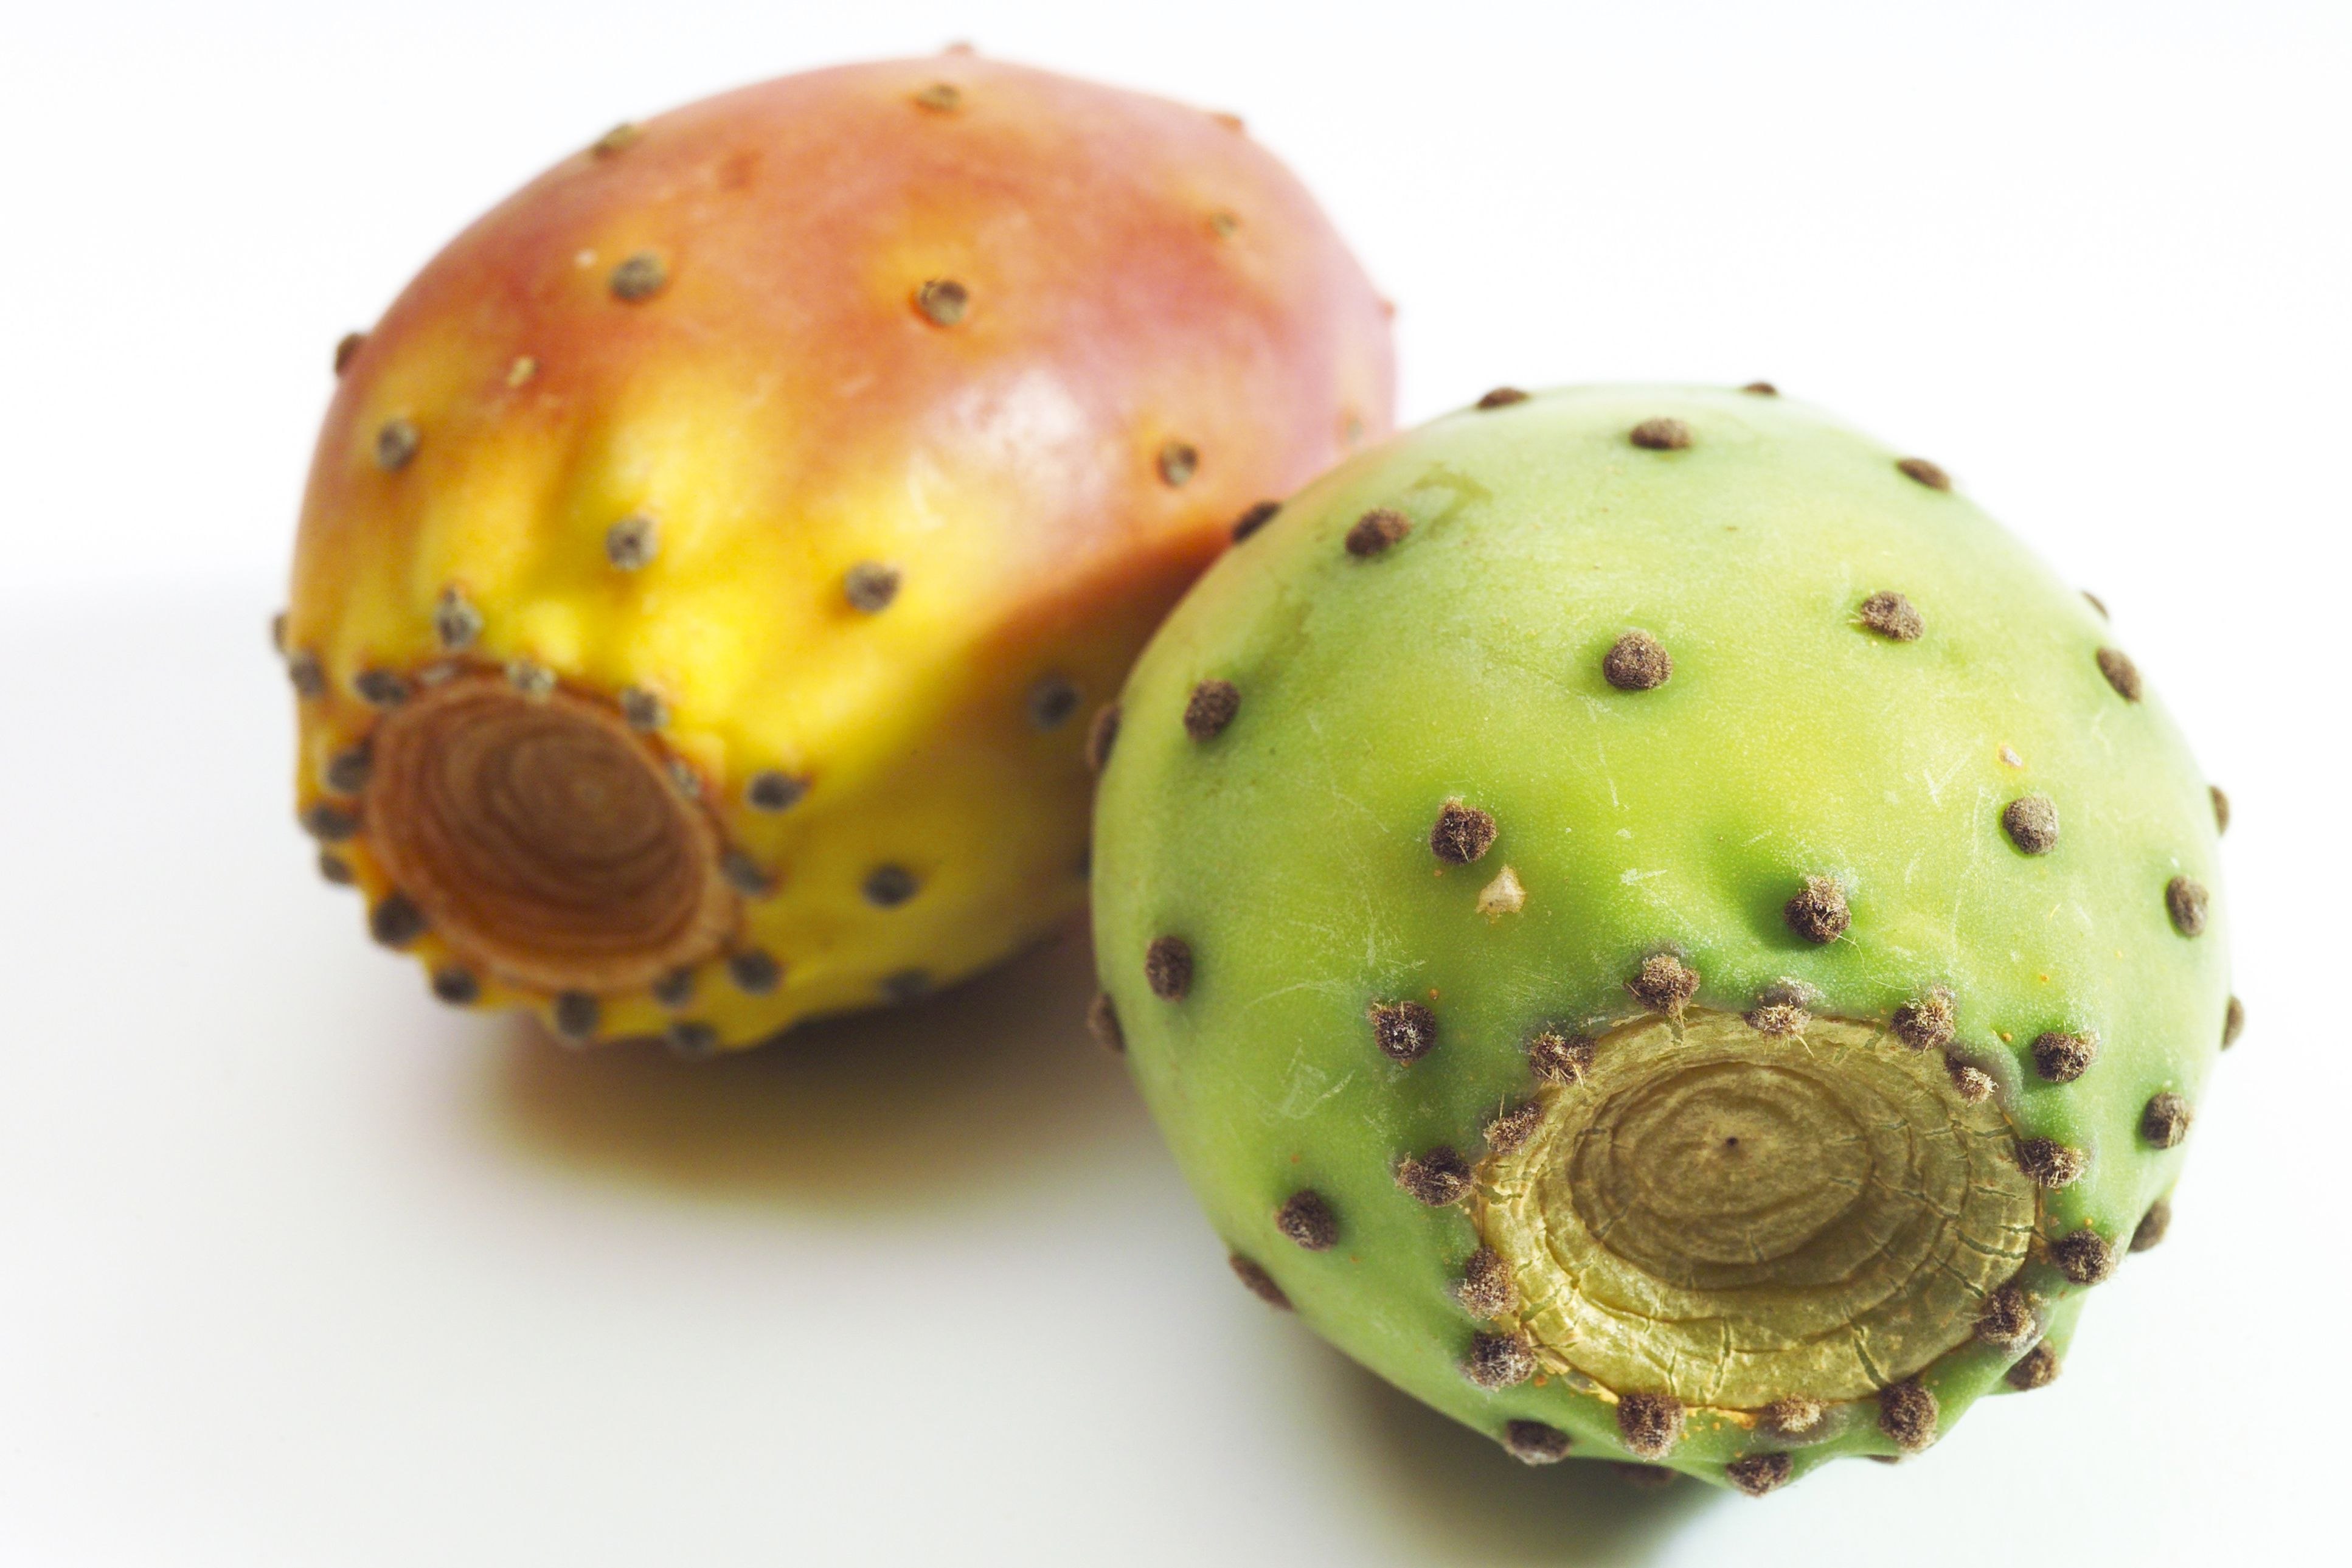 Prickly pear. Prickly Pear фрукт. Prickly Pear Cactus. Опунция плоды. Колючая груша.